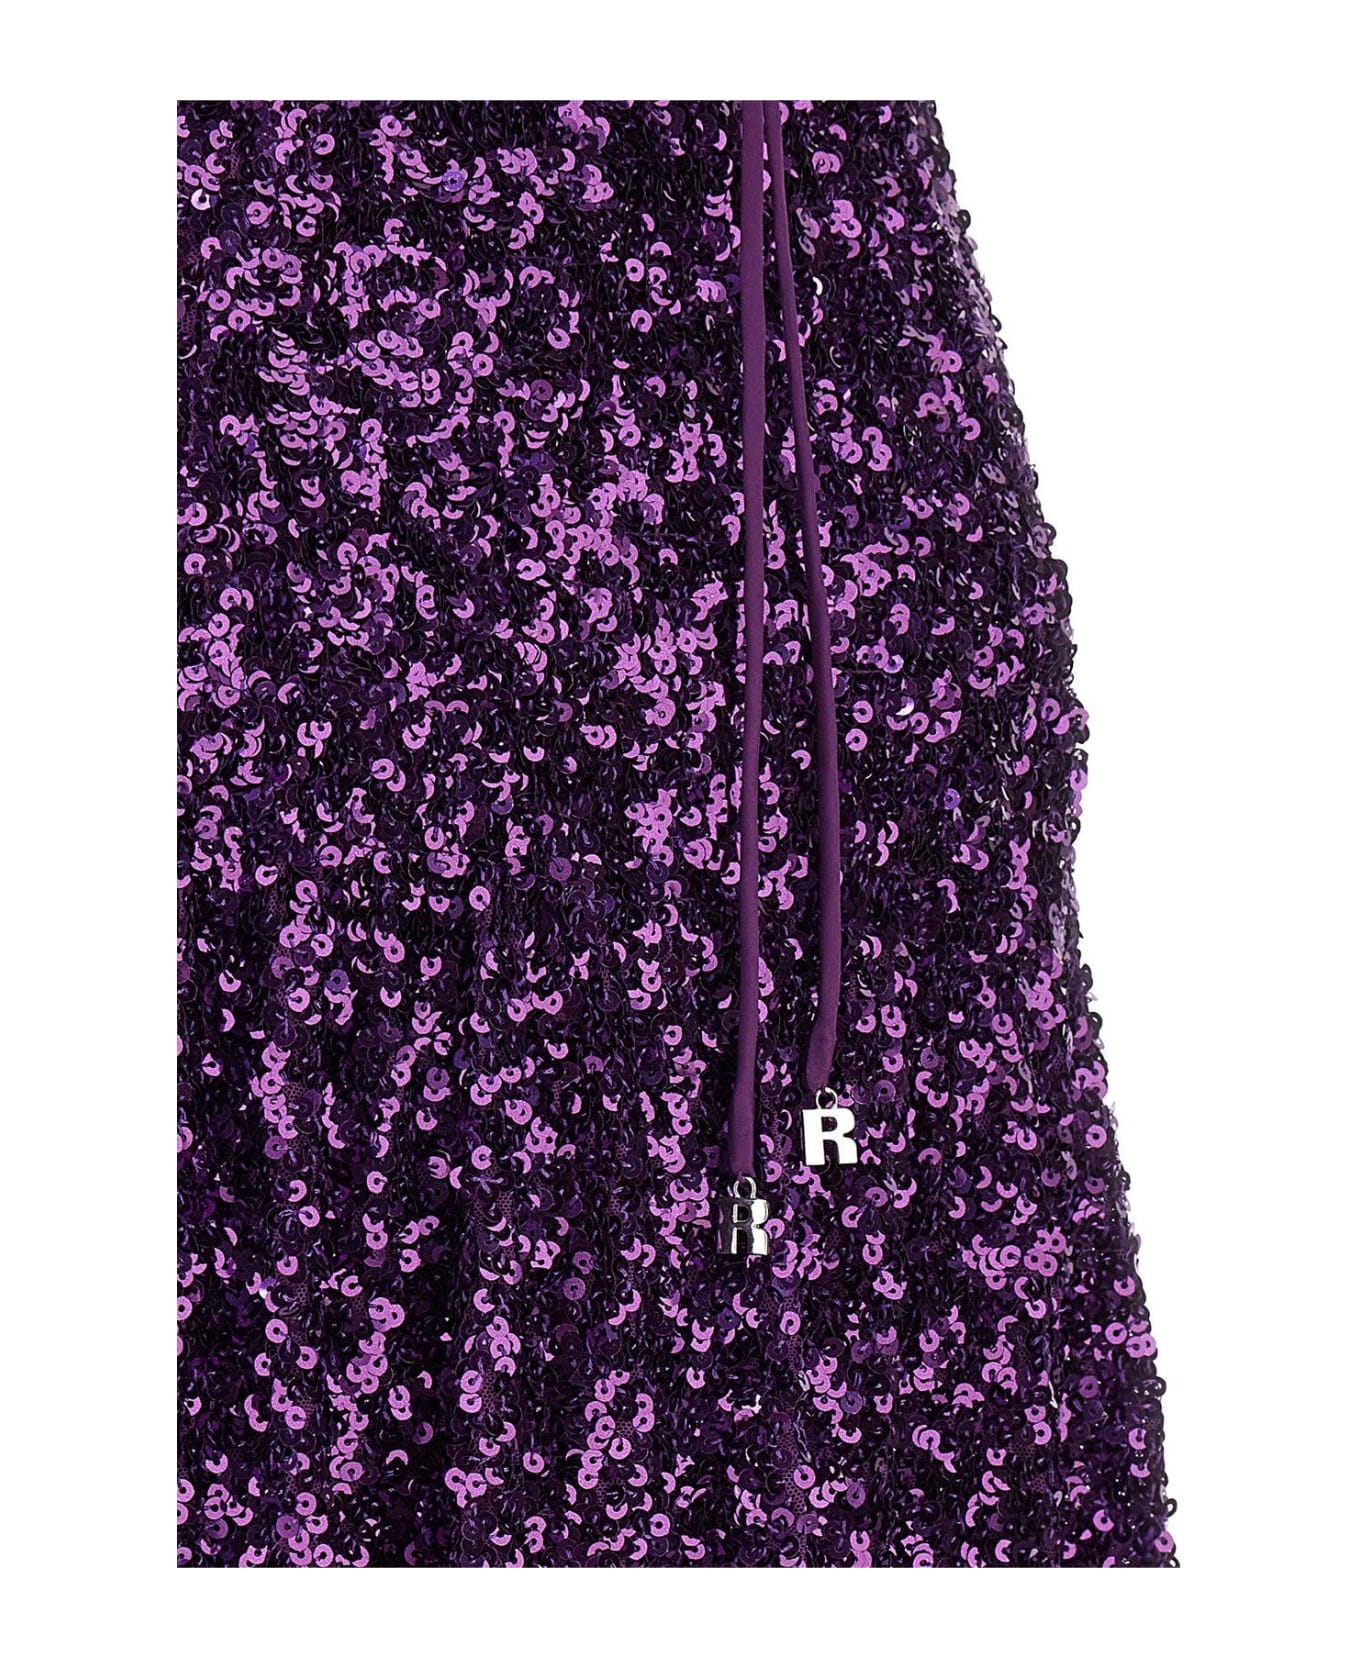 Rotate by Birger Christensen Sequin Embellished Maxi Dress - Purple